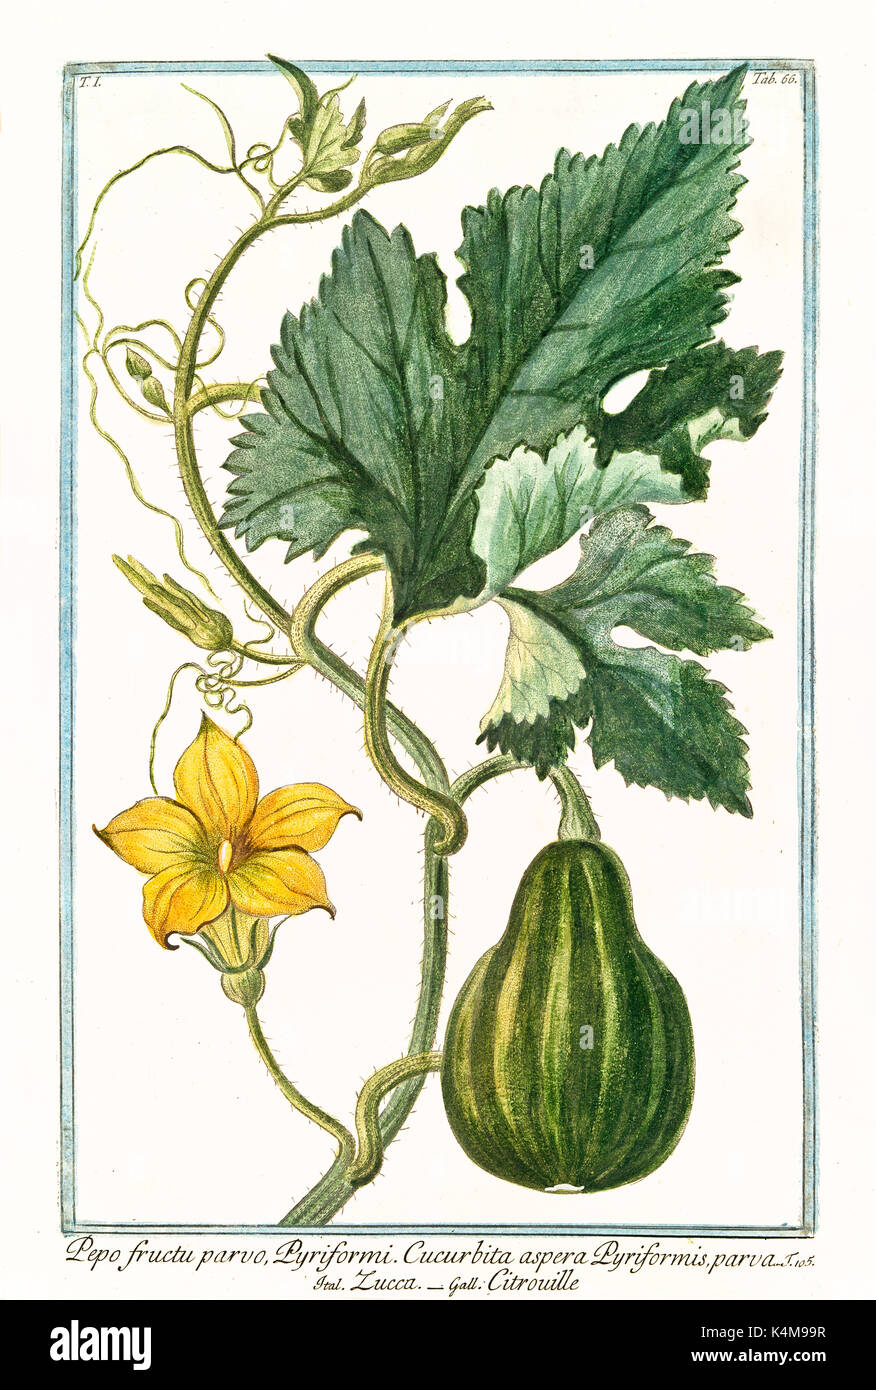 Old illustration of Pepo fructu parvo pyriformi (Cucurbita pepo). By G. Bonelli on Hortus Romanus, publ. N. Martelli, Rome, 1772 – 93 Stock Photo